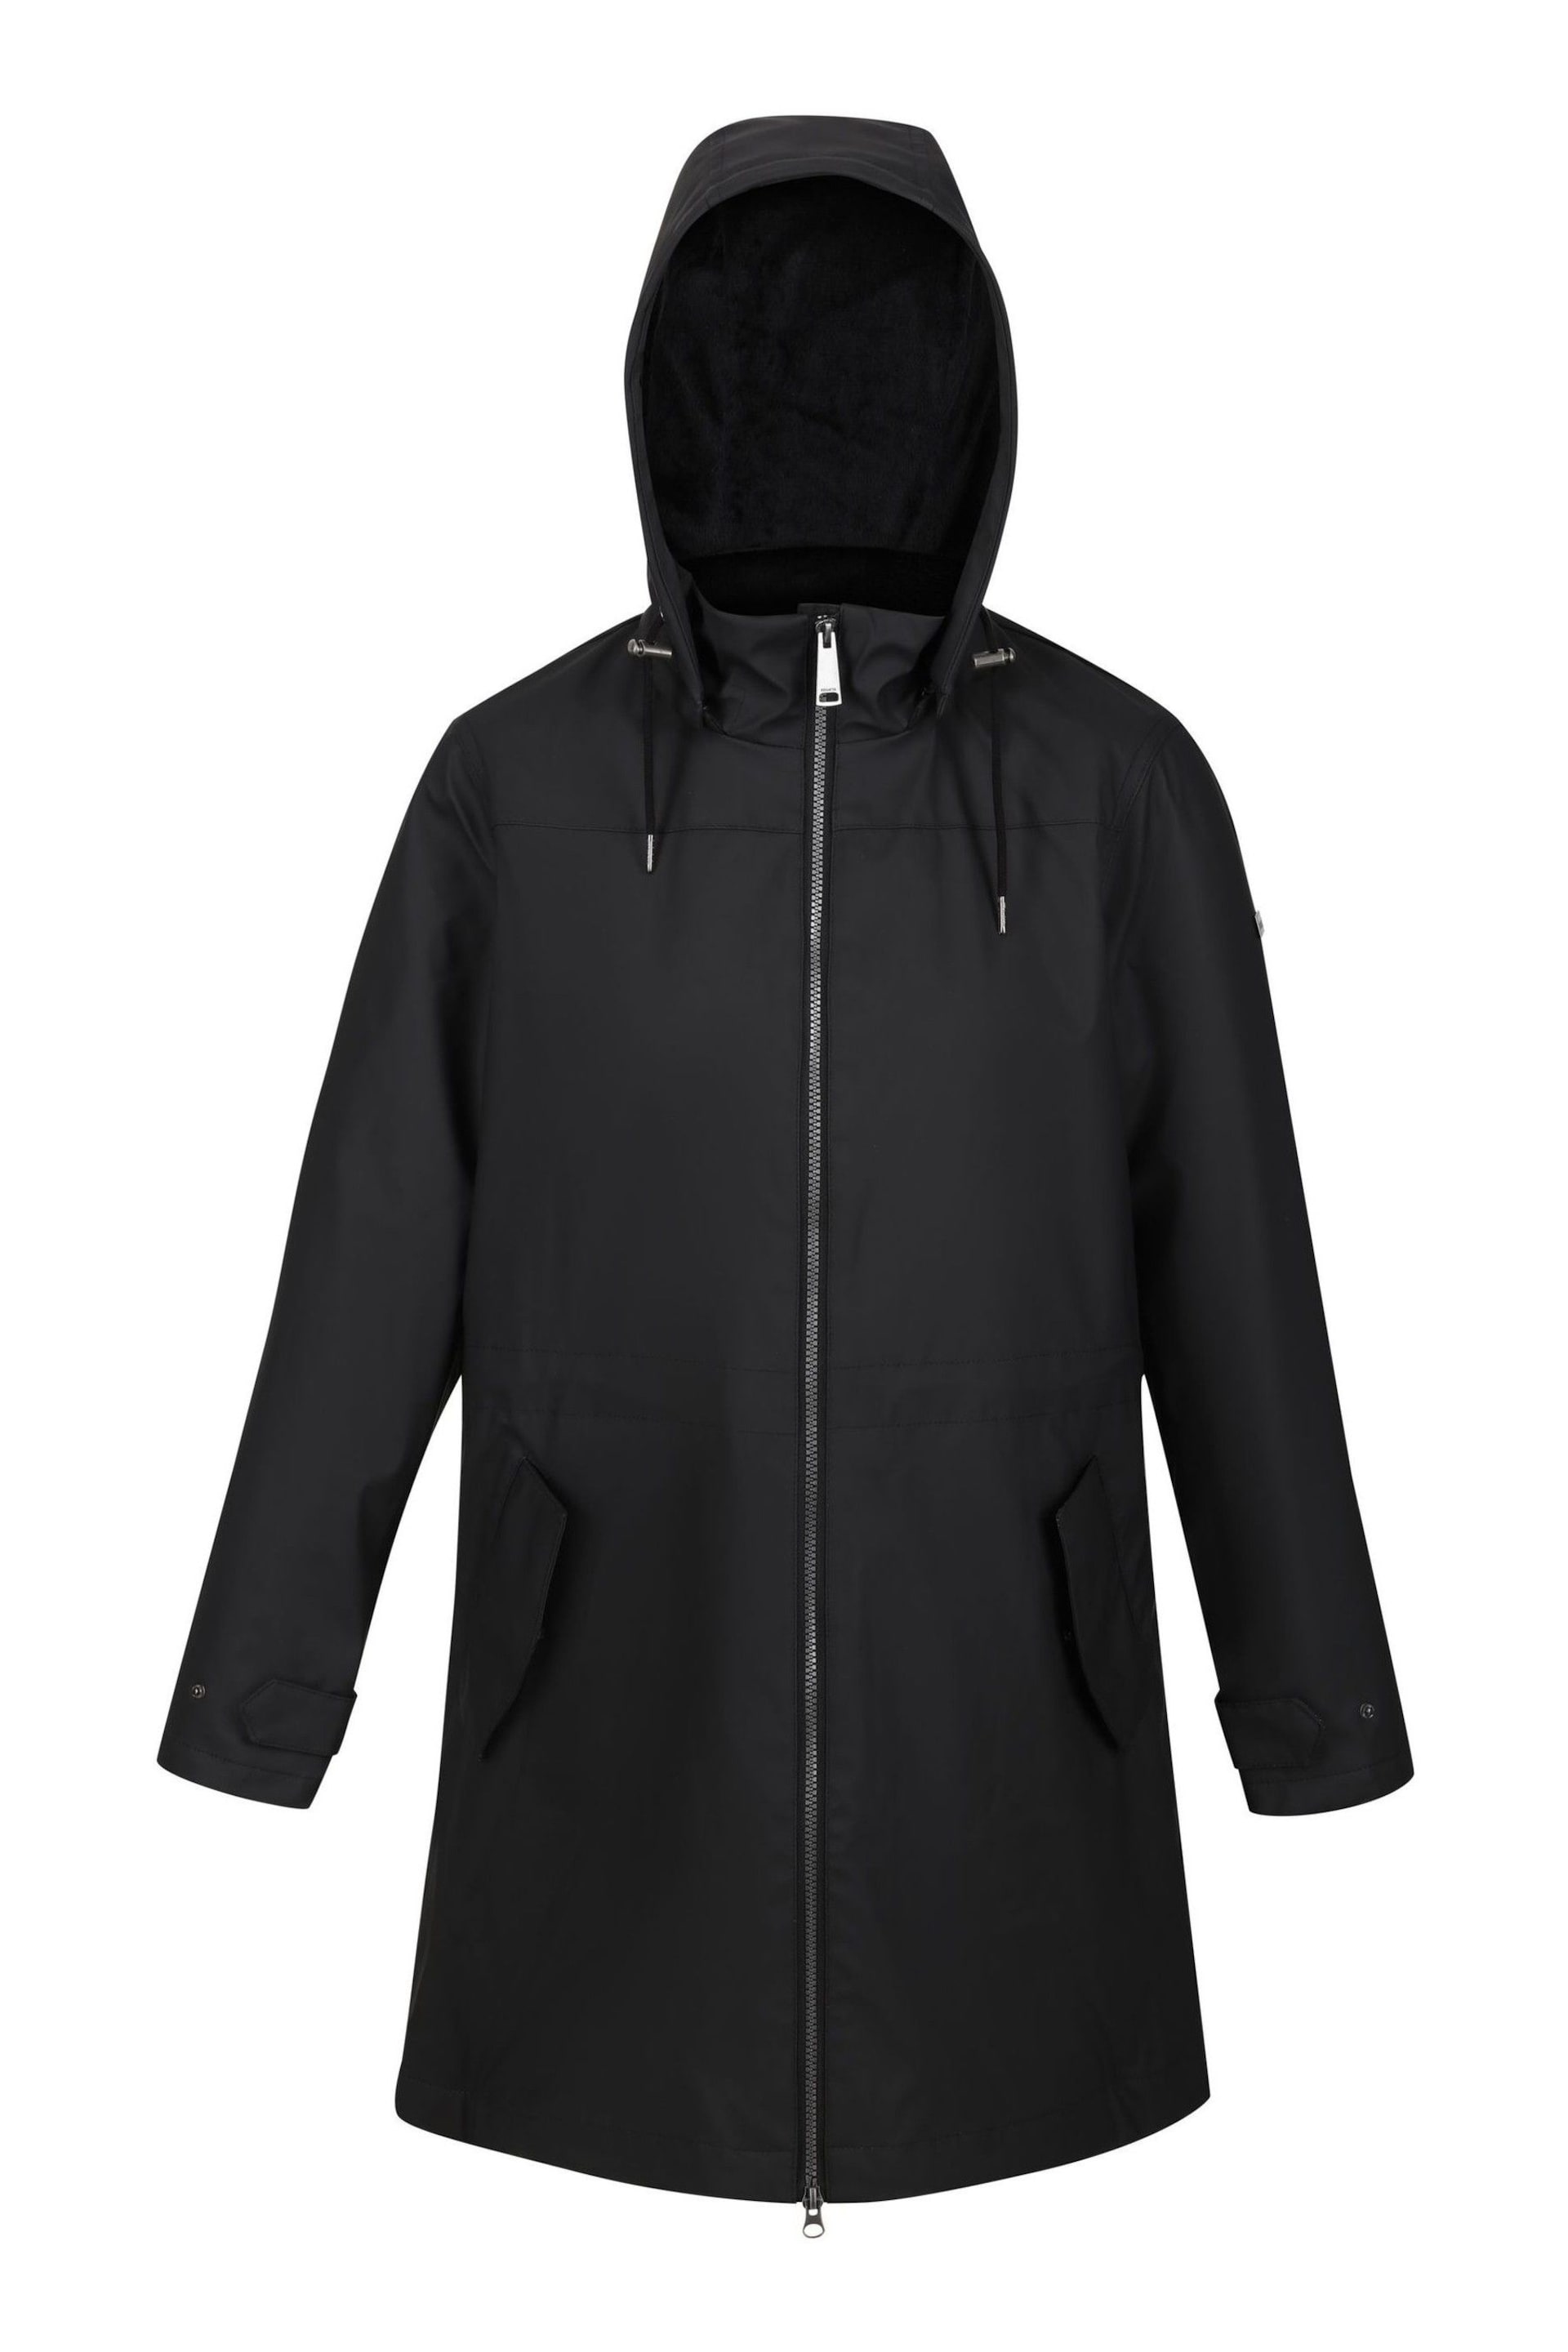 Regatta Black Fantine Insulated Thermal Jacket - Image 7 of 9